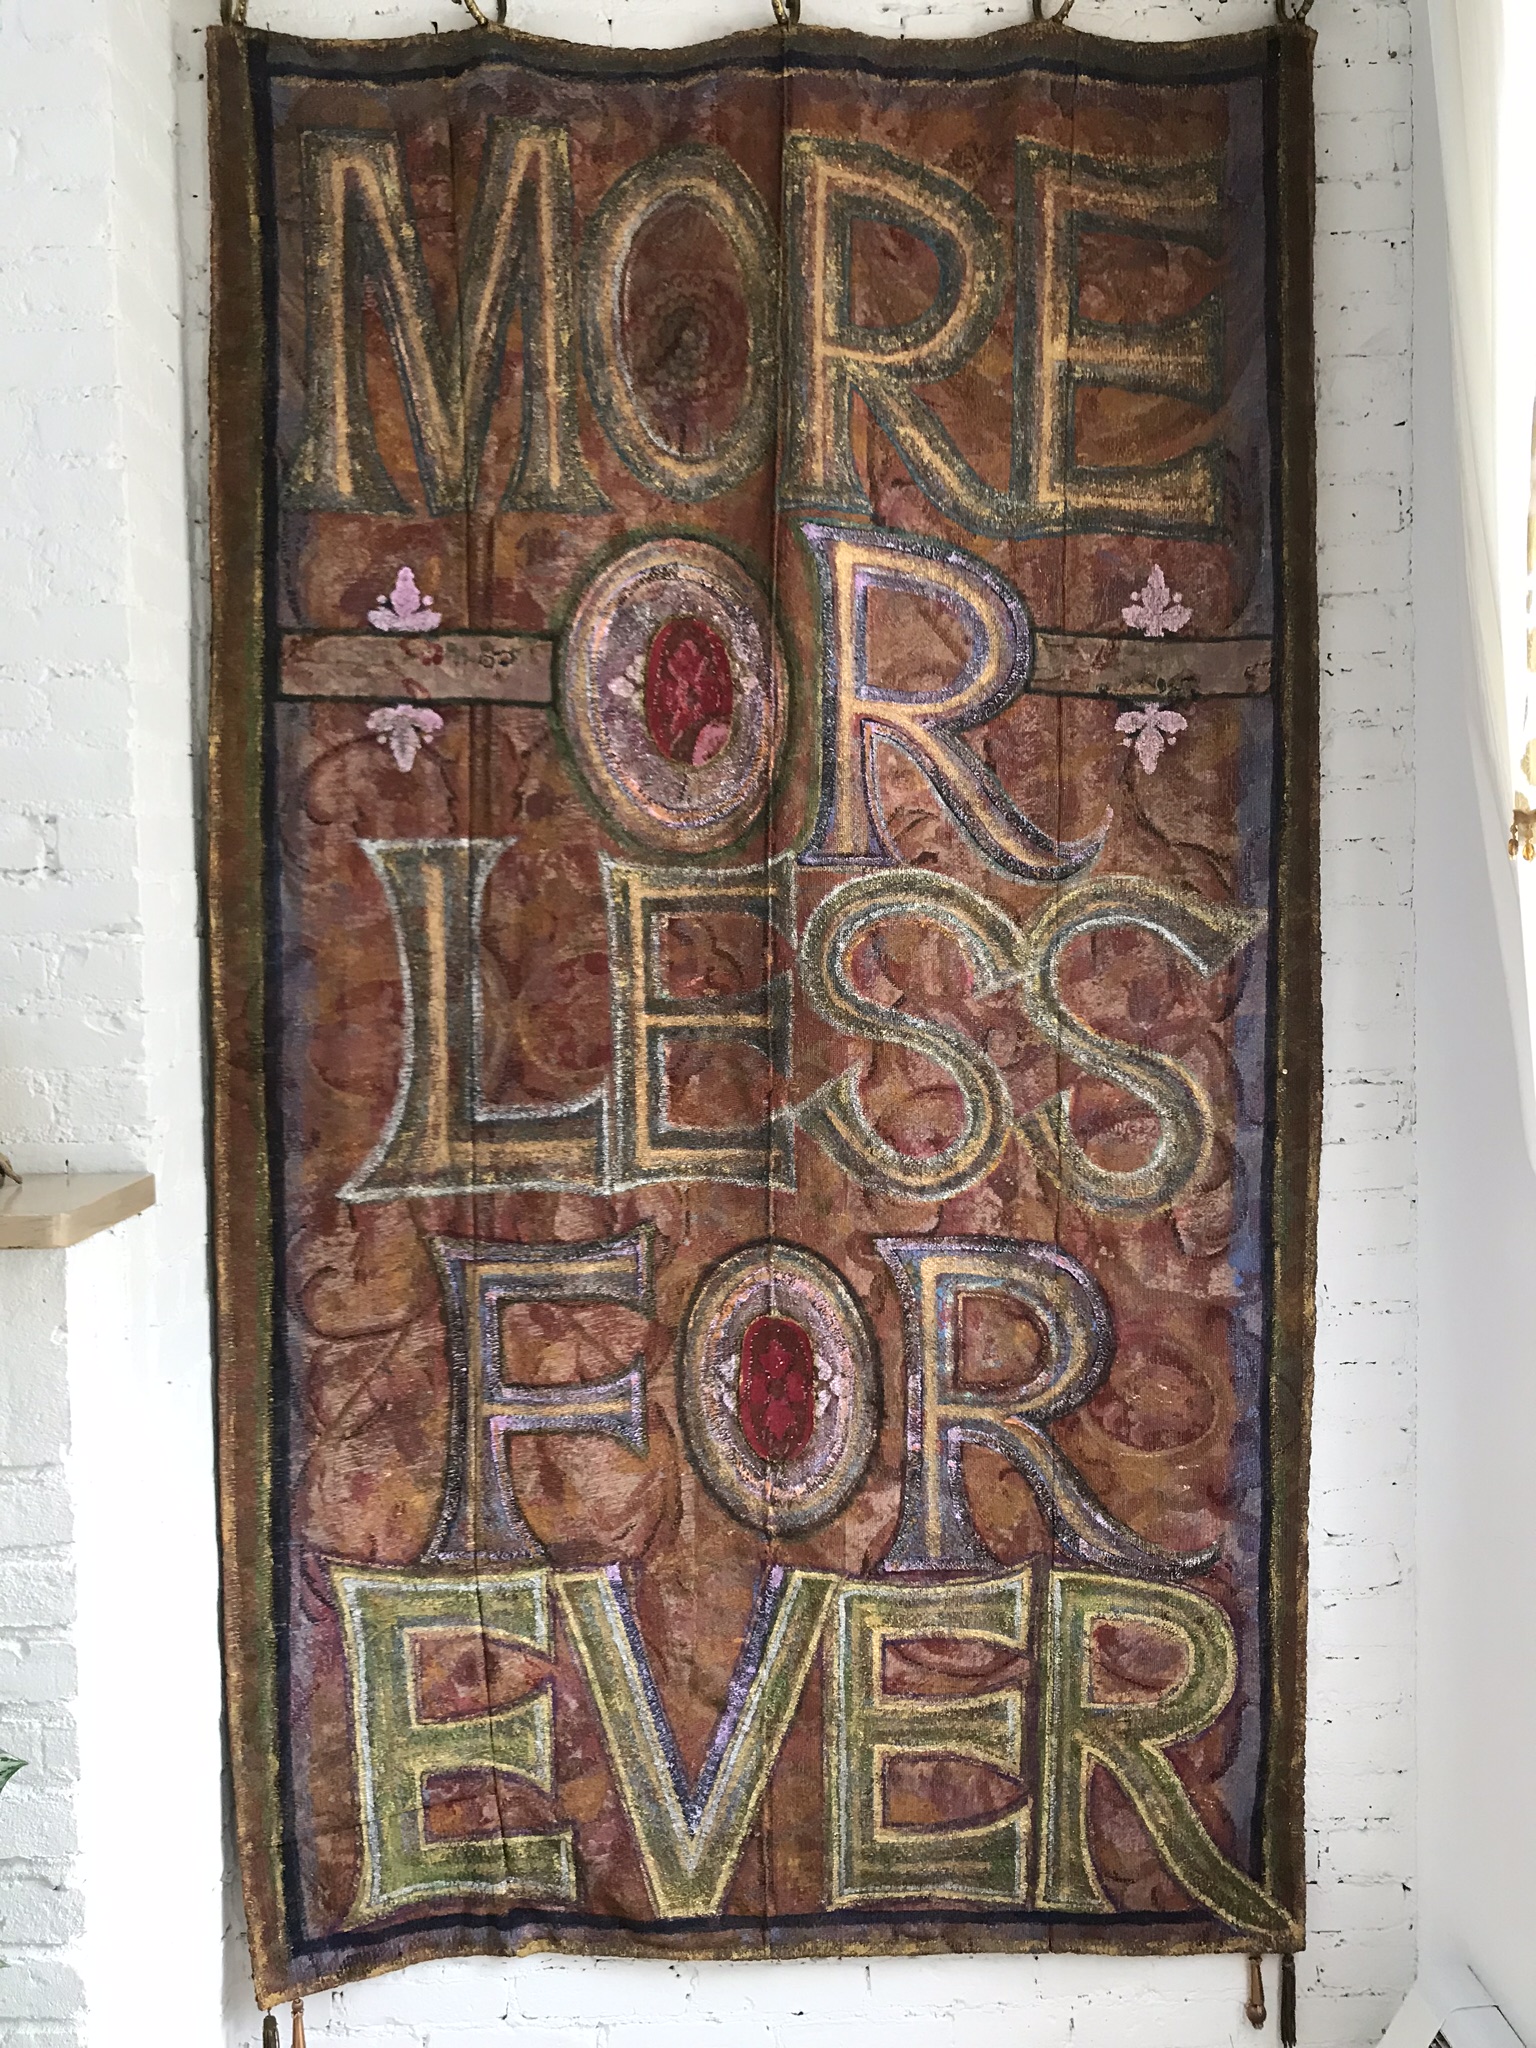 More or Less Forever art